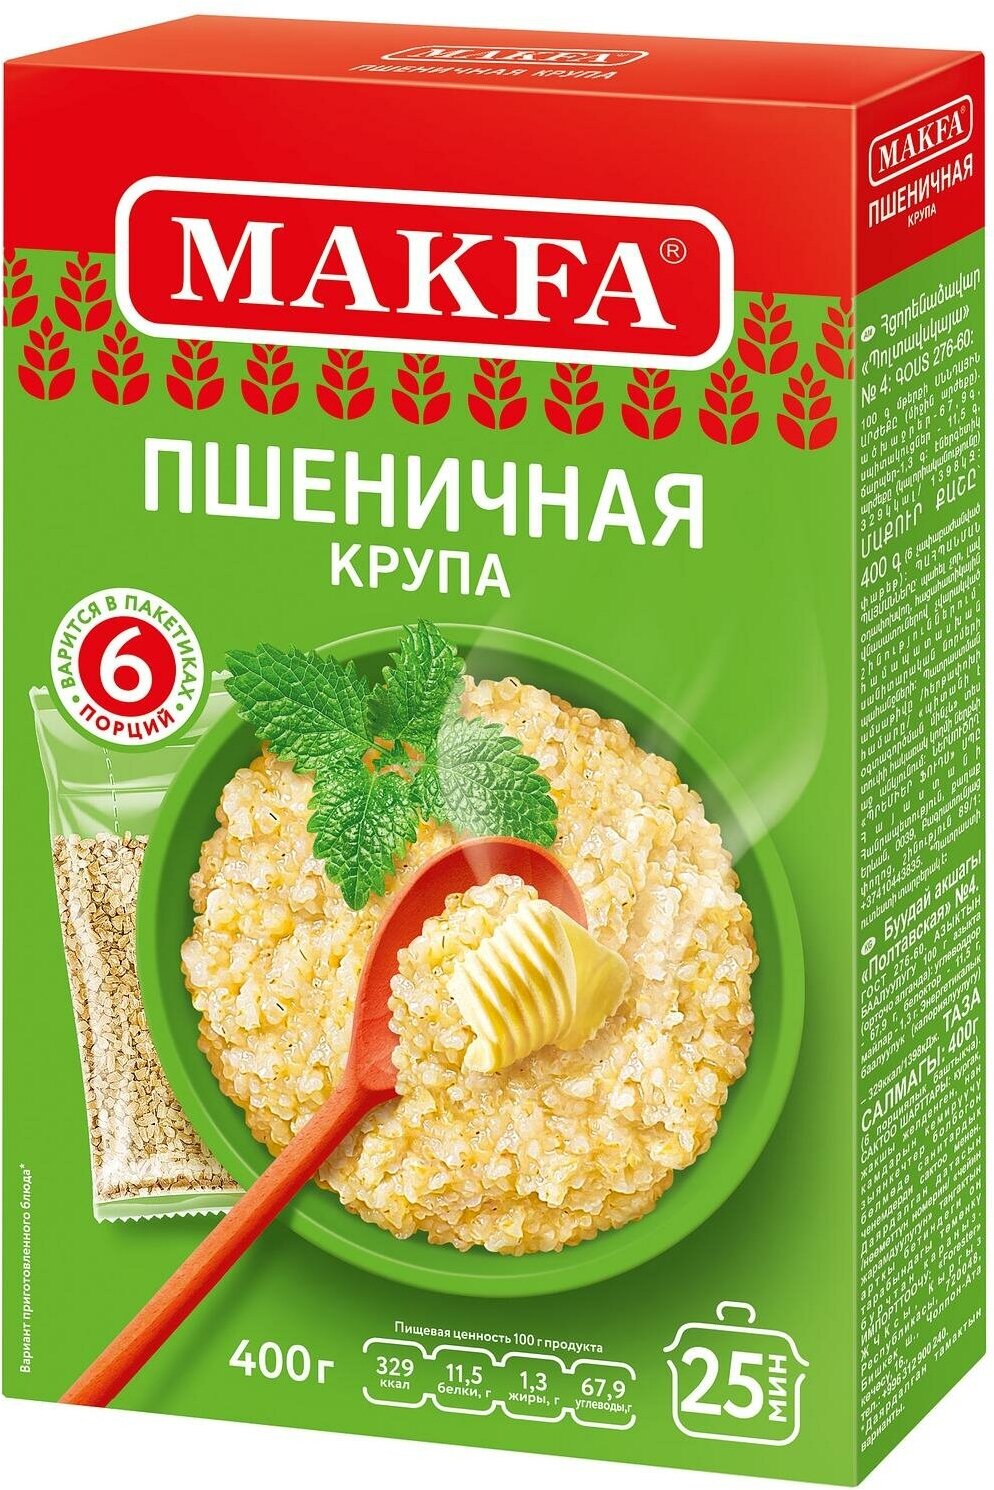 Упаковка 9 штук Пшеничная крупа №4 Макфа "Полтавская" 400г (6 х 66,5г)(54 пакетика)